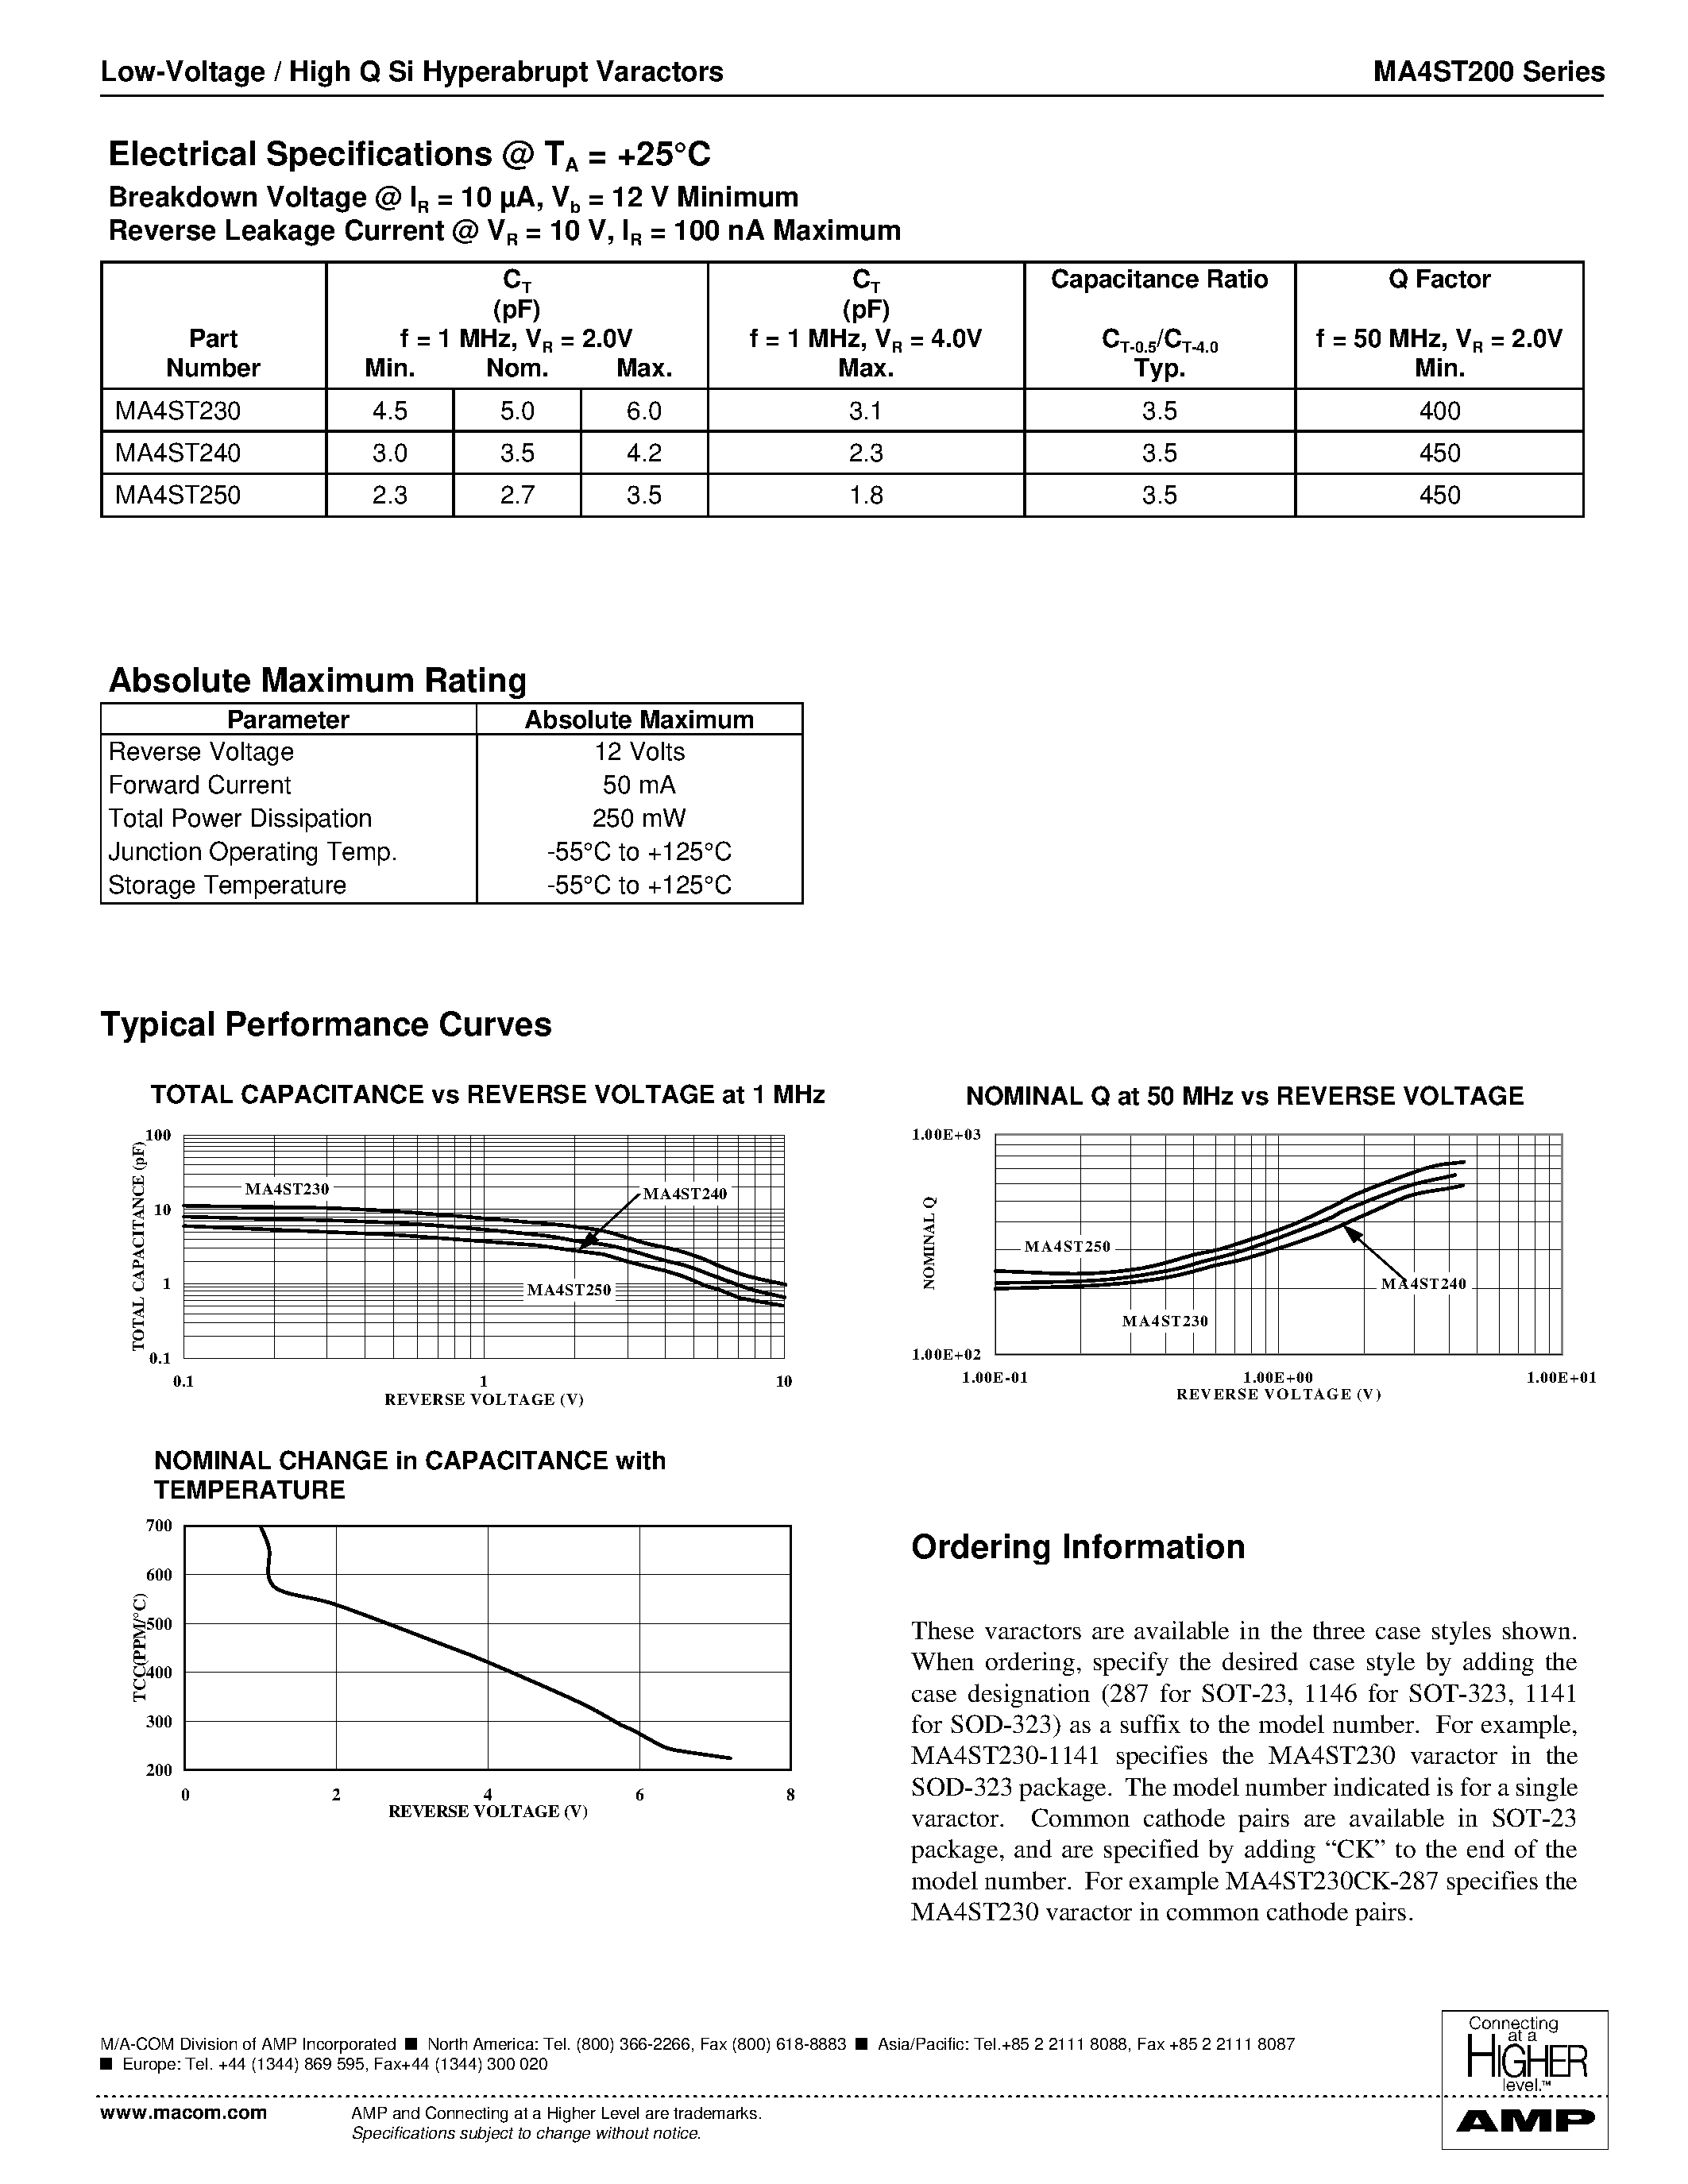 Datasheet MA4ST200 - Low-Voltage / High Q Si Hyperabrupt Varactors page 2